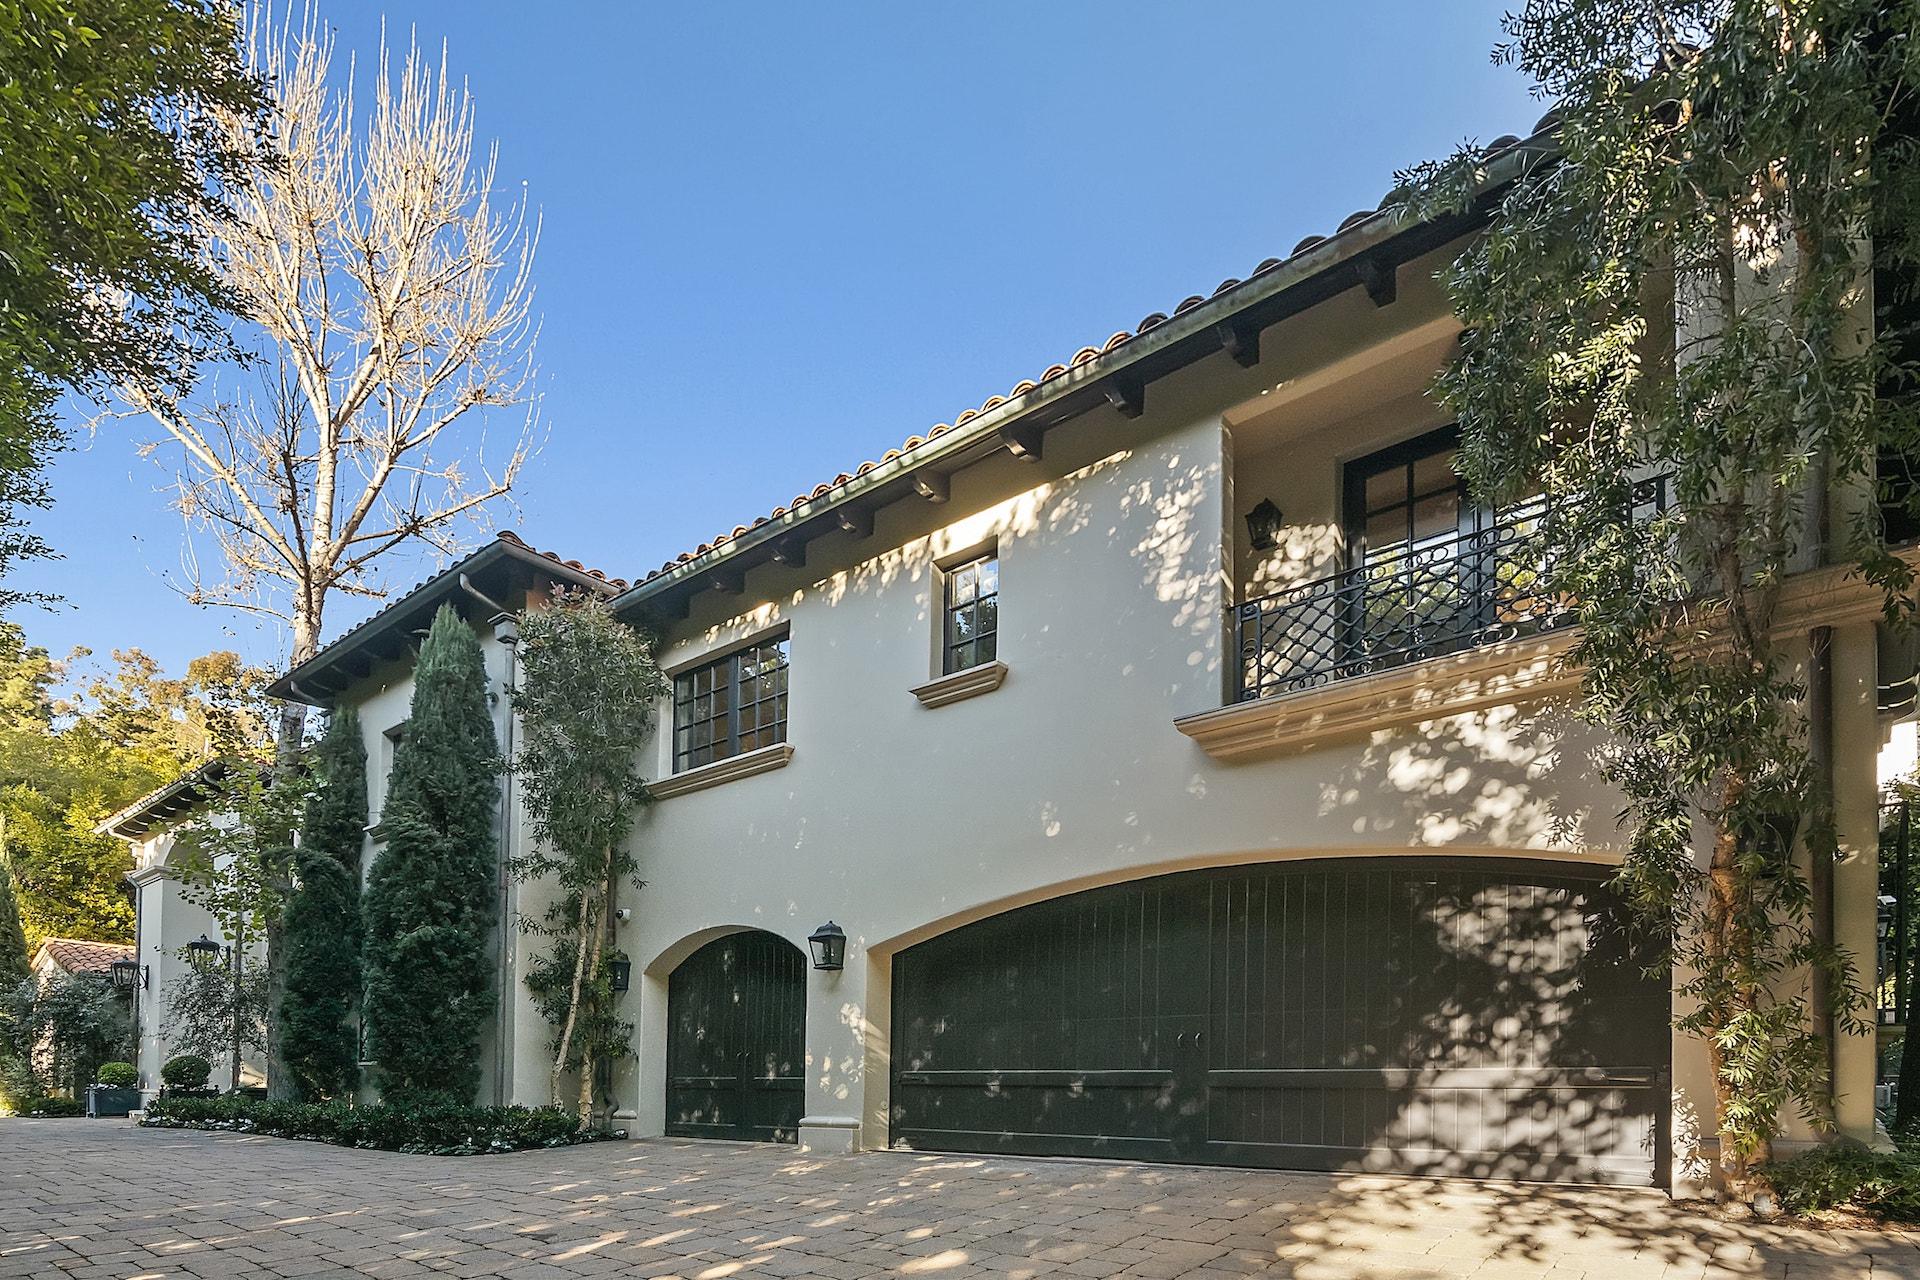 Sofía Vergara and Joe Manganiello's Beverly Hills Home Hits the Market for $19.6M